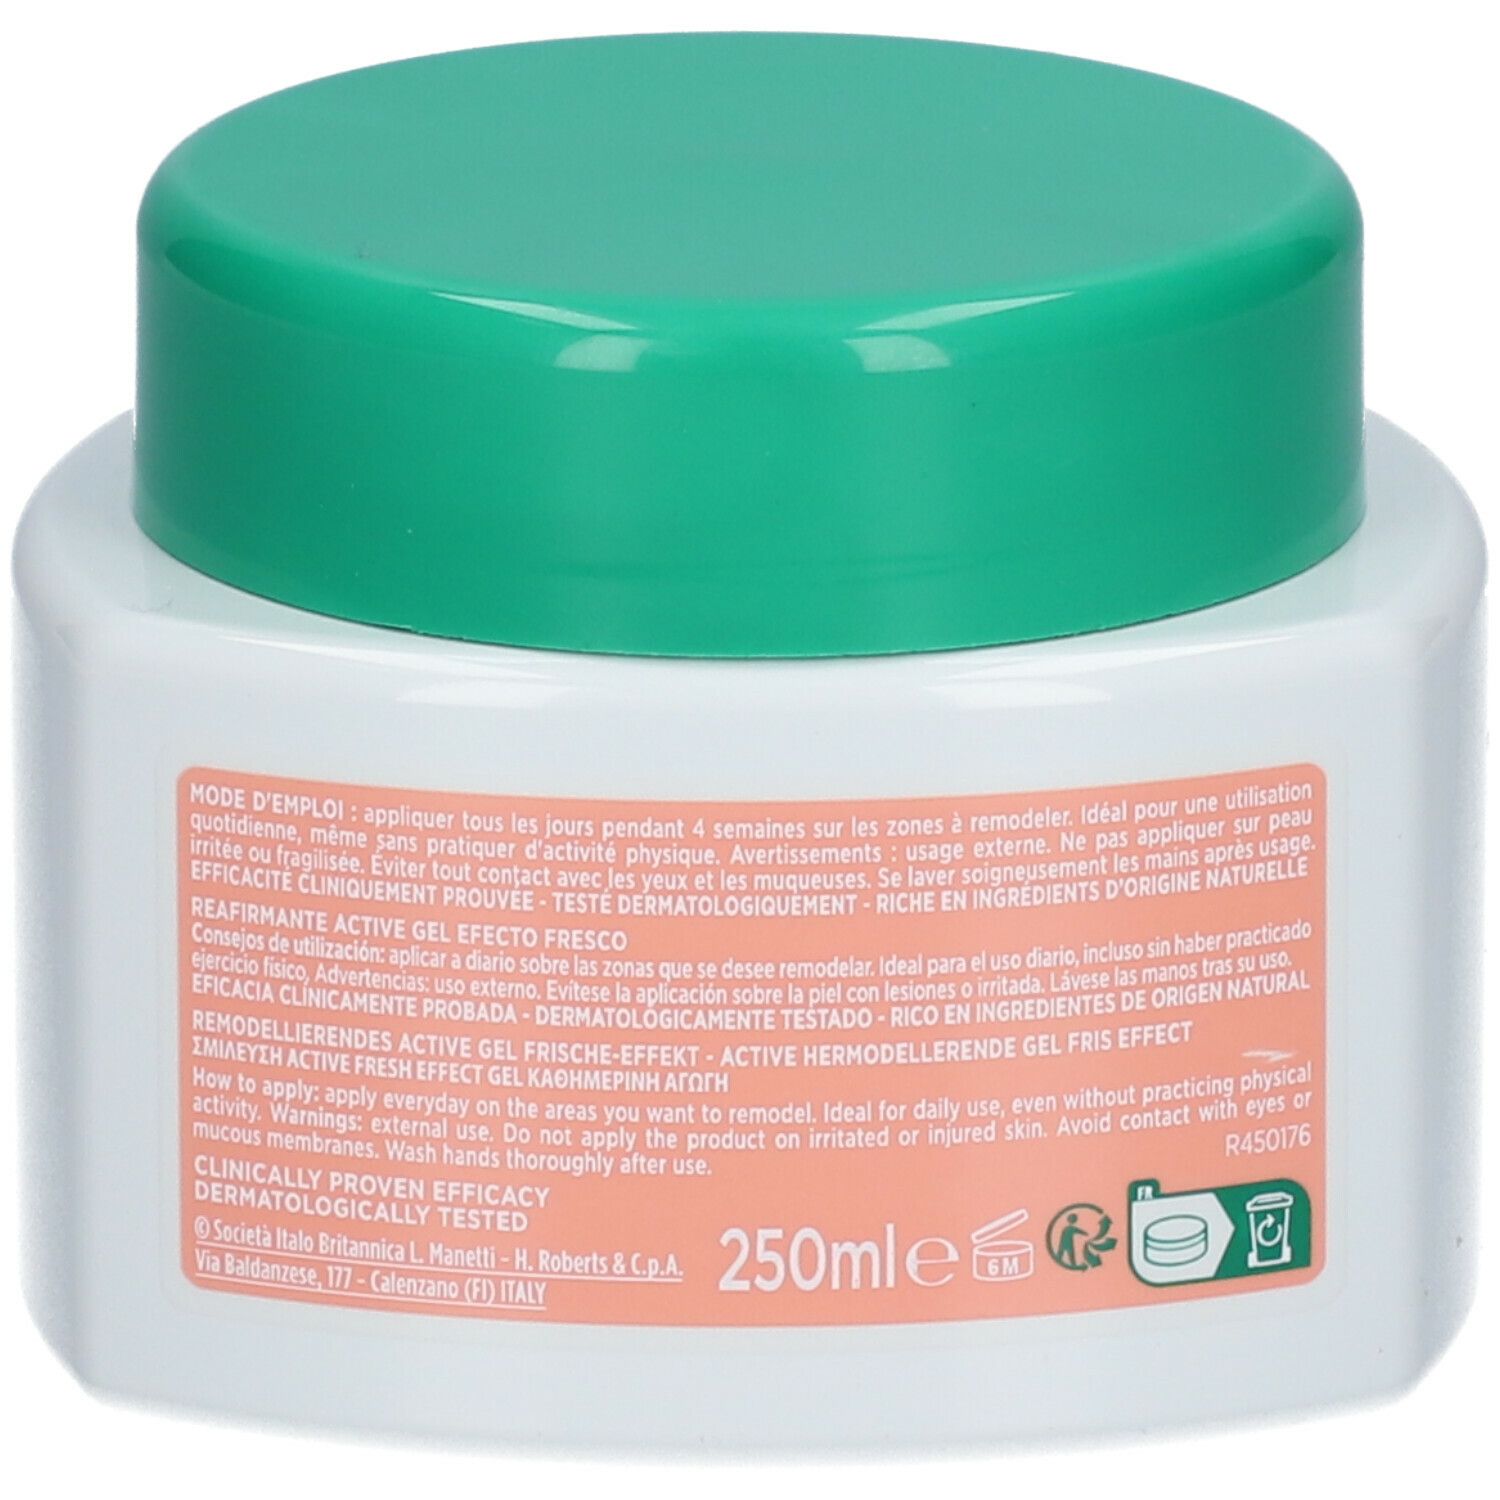 Somatoline Cosmetic® REMODELANT ACTIVE Gel Frais Remodelant Active